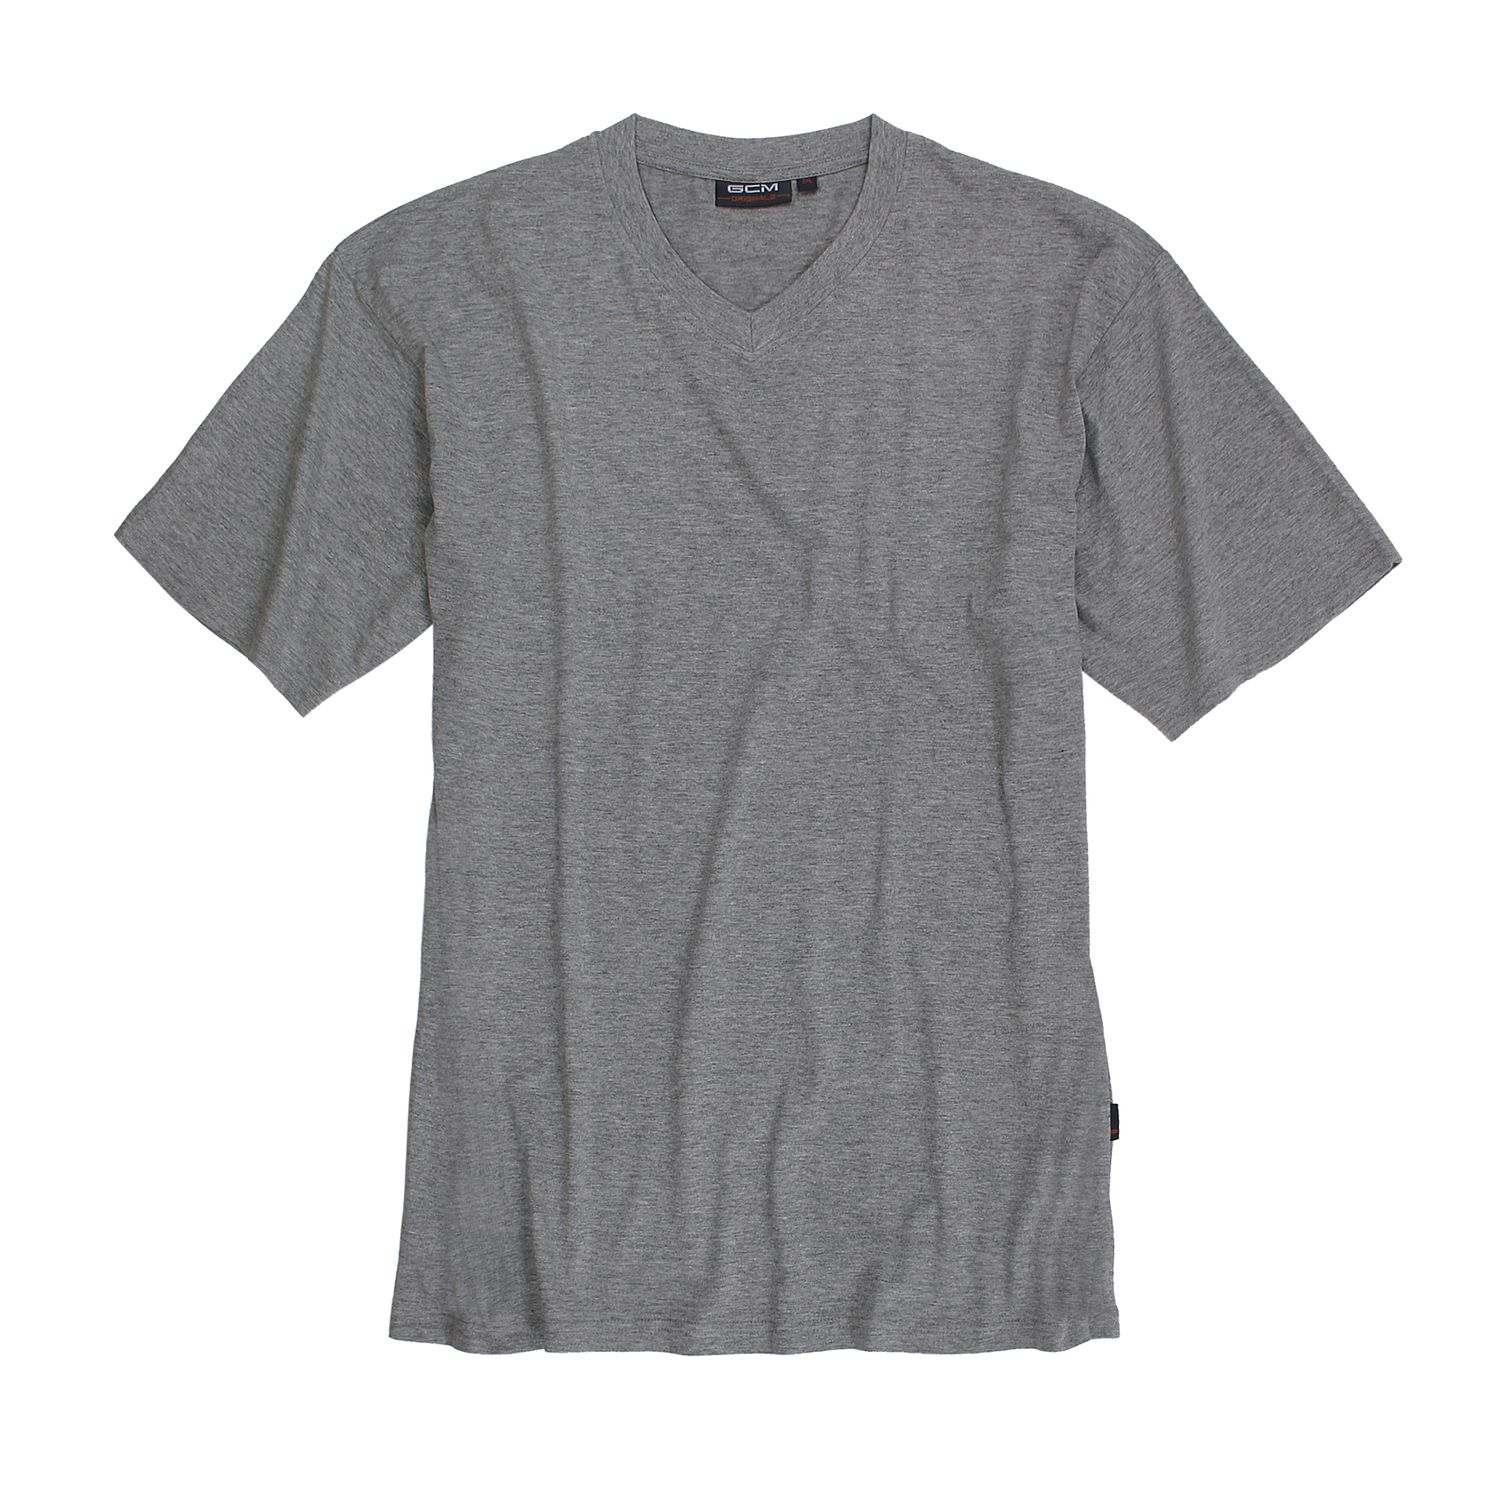 V-neck T-shirt grey heathered by GCM Originals up to oversize 6XL